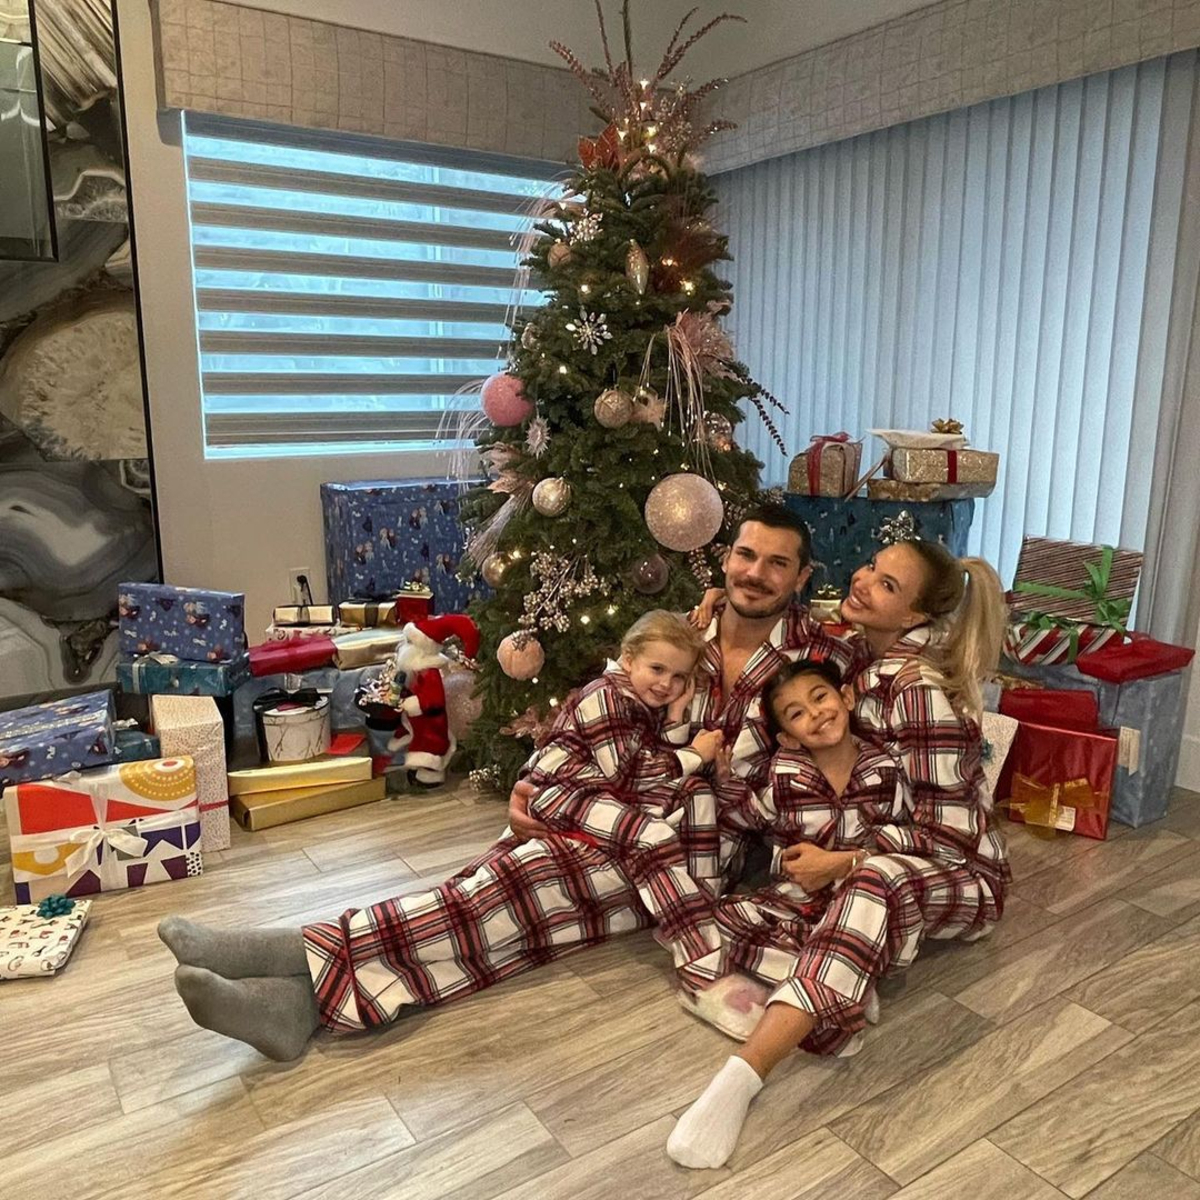 Celeb Families Wearing Matching Pajamas For Christmas